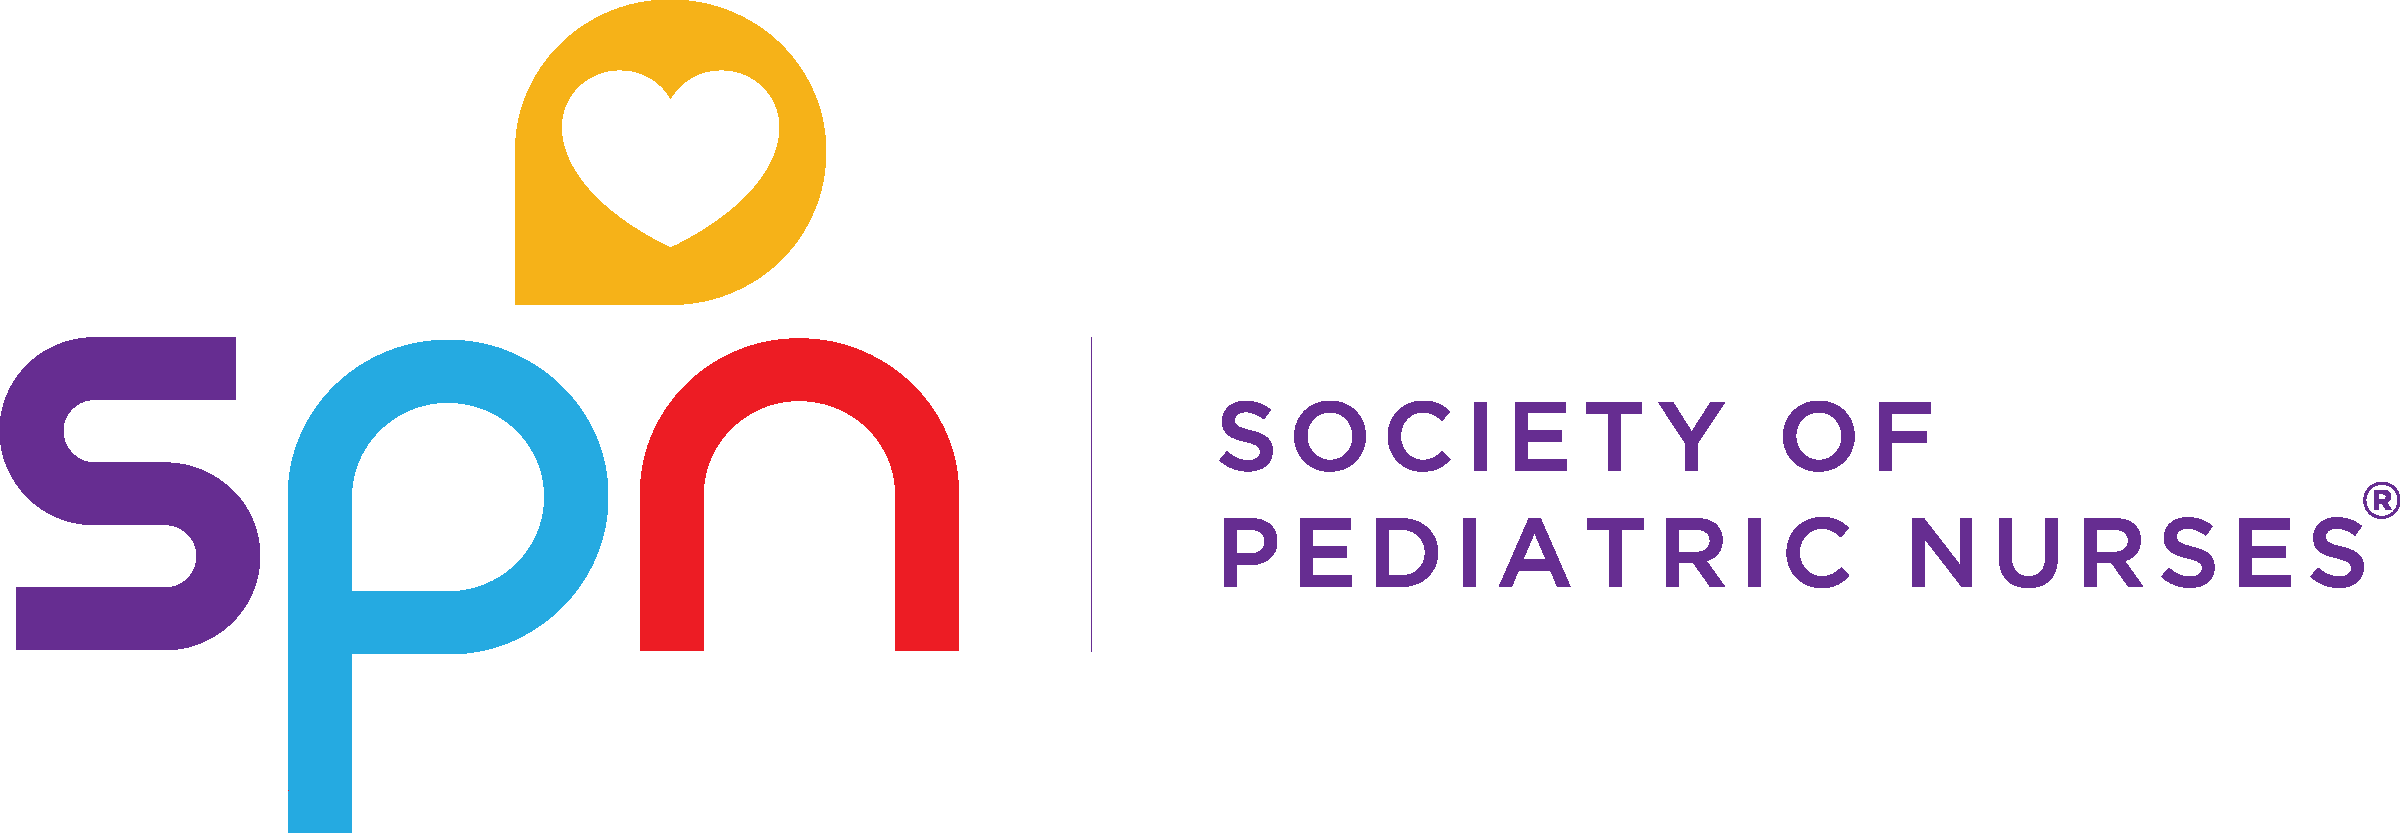 Society of Pediatric Nurses